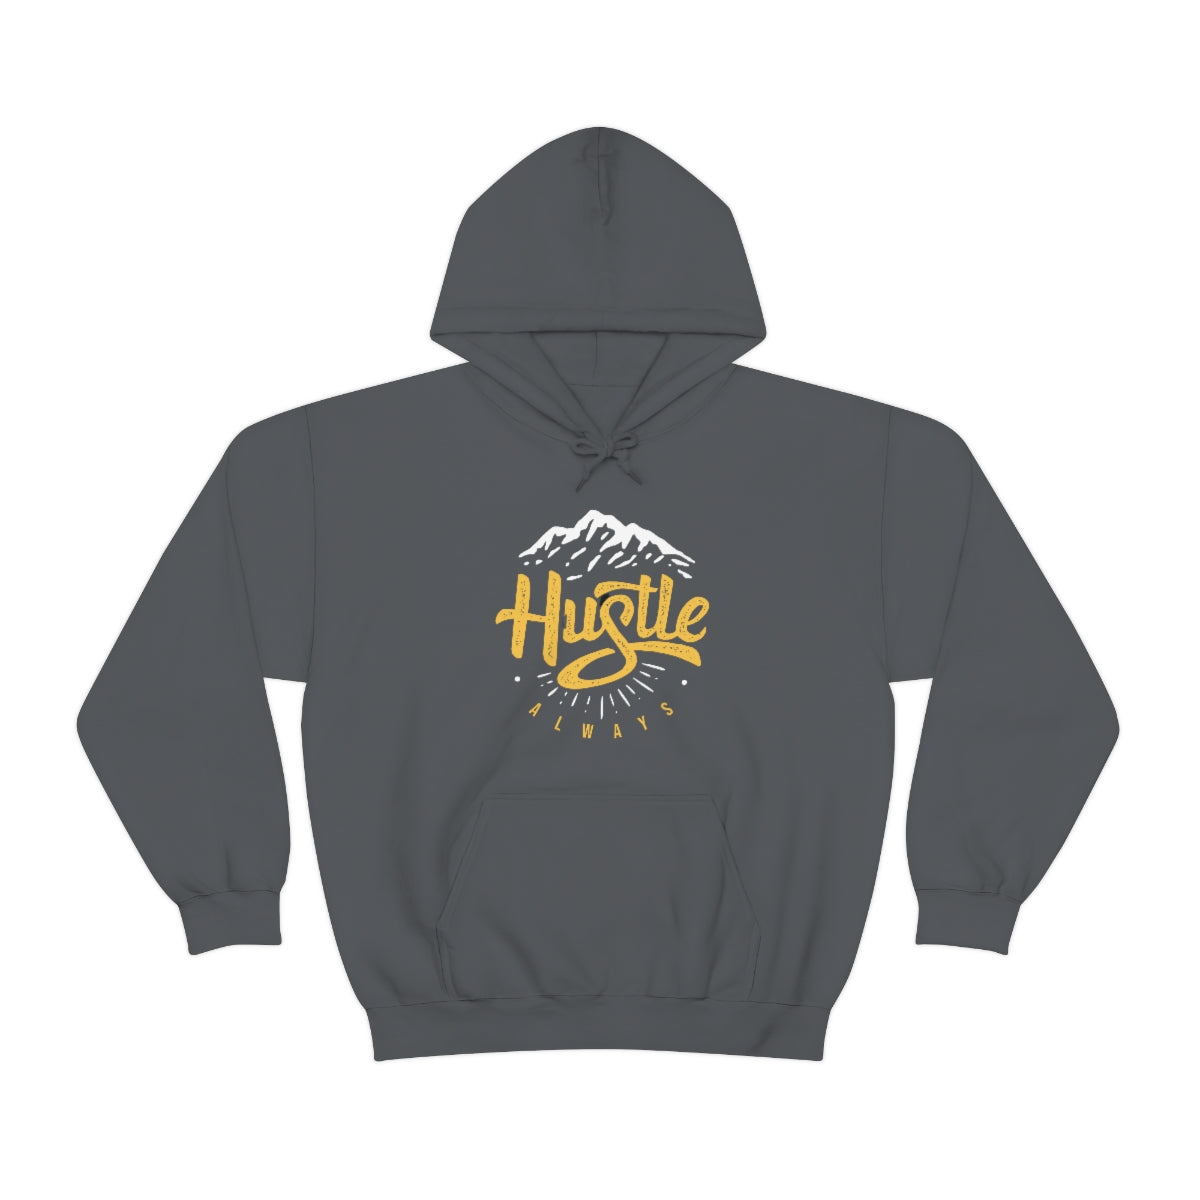 Always Hustle Hooded Sweatshirt